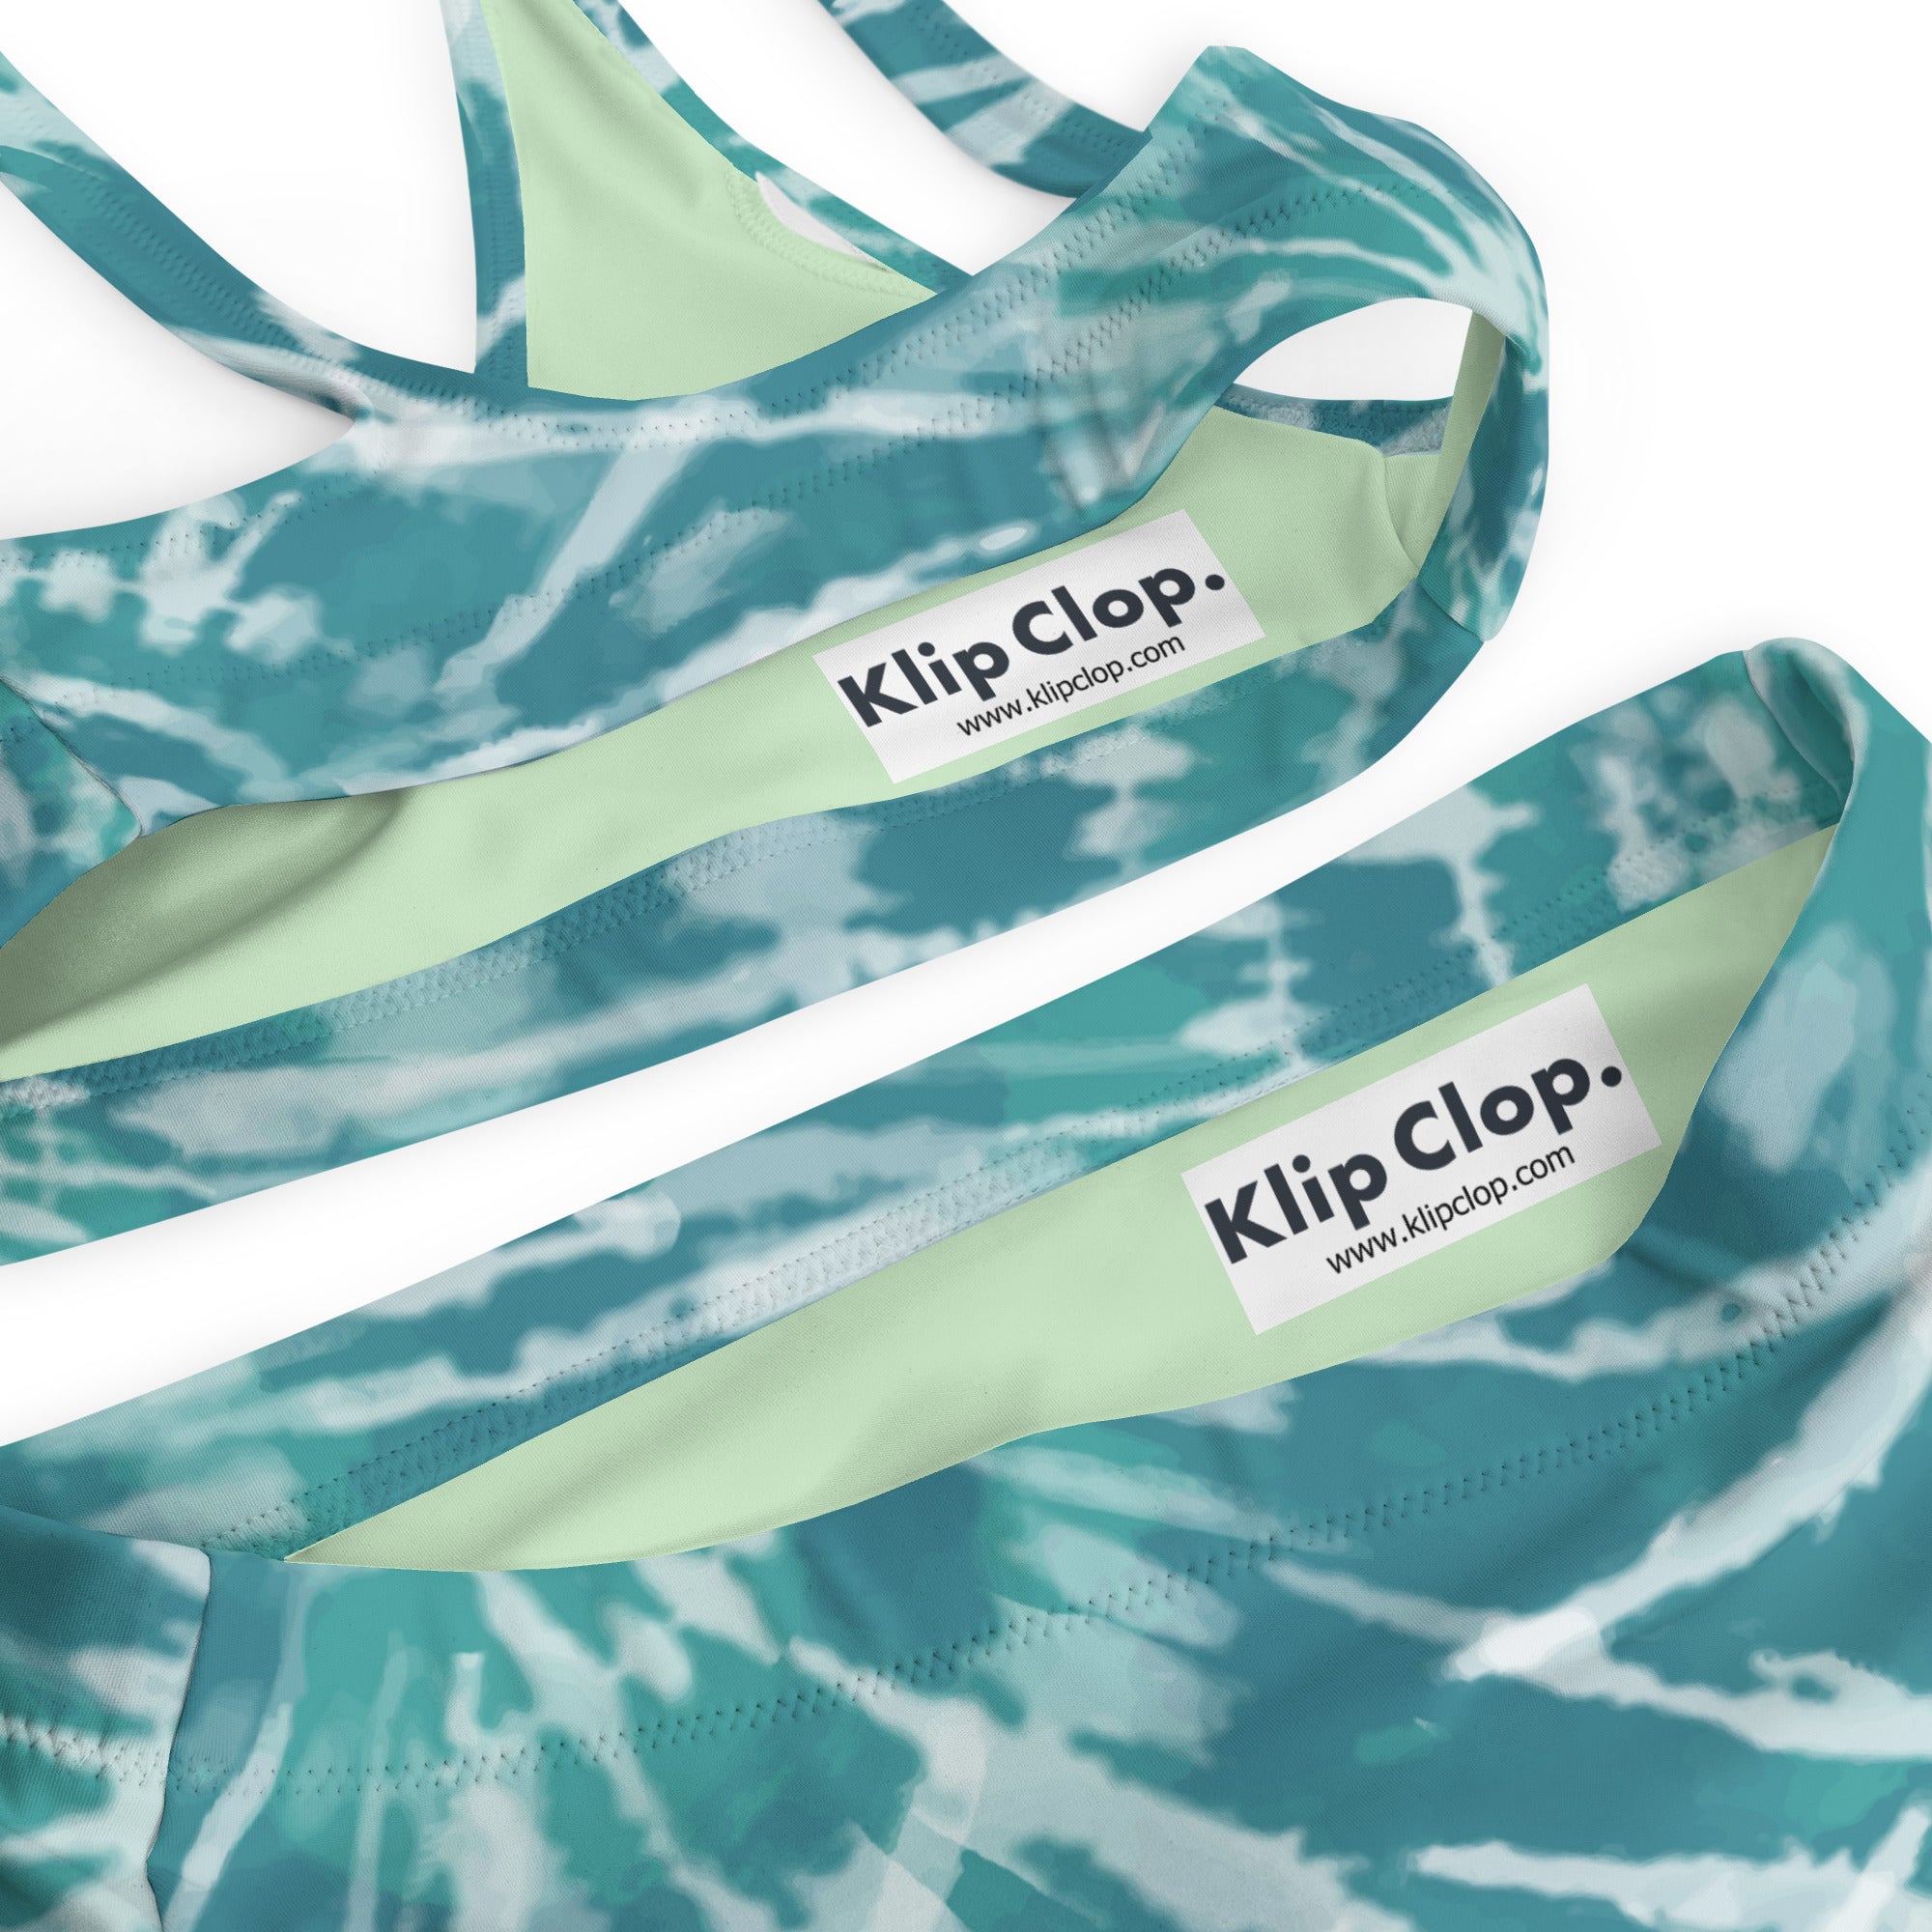 Recycled high-waisted bikini- Hang Loose Tie Dye Pattern 05